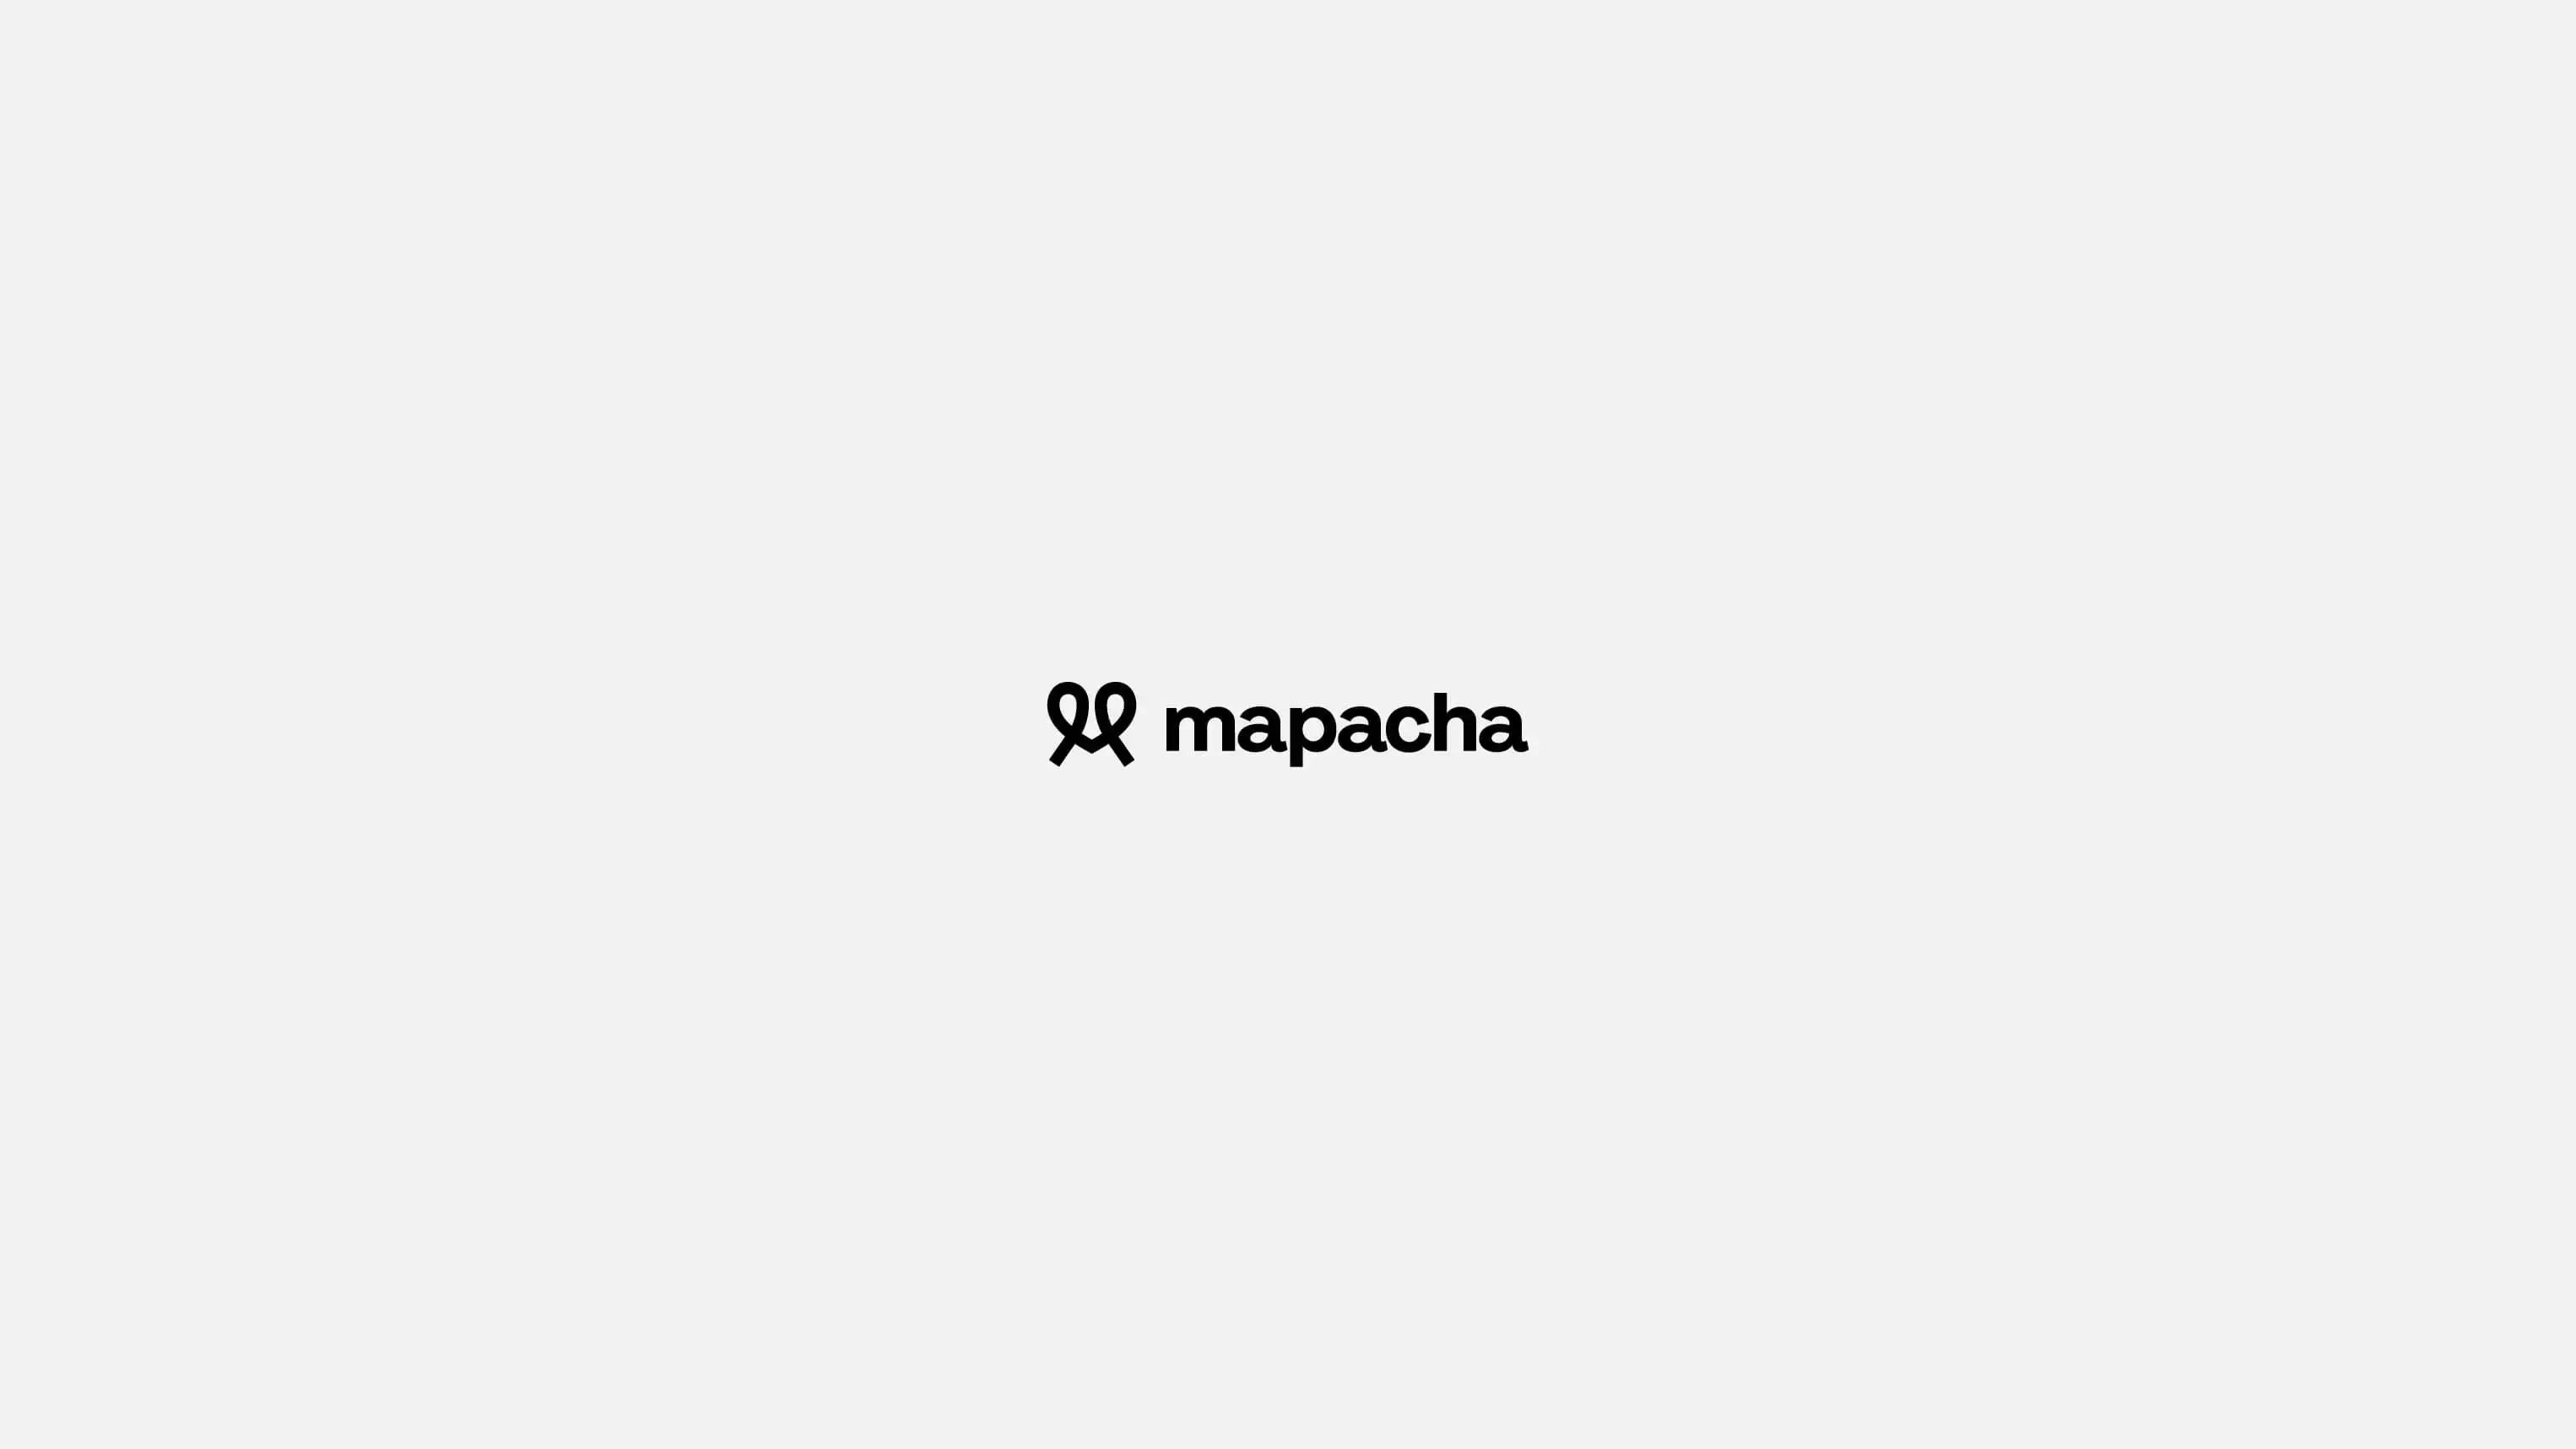 Mapacha's logotype